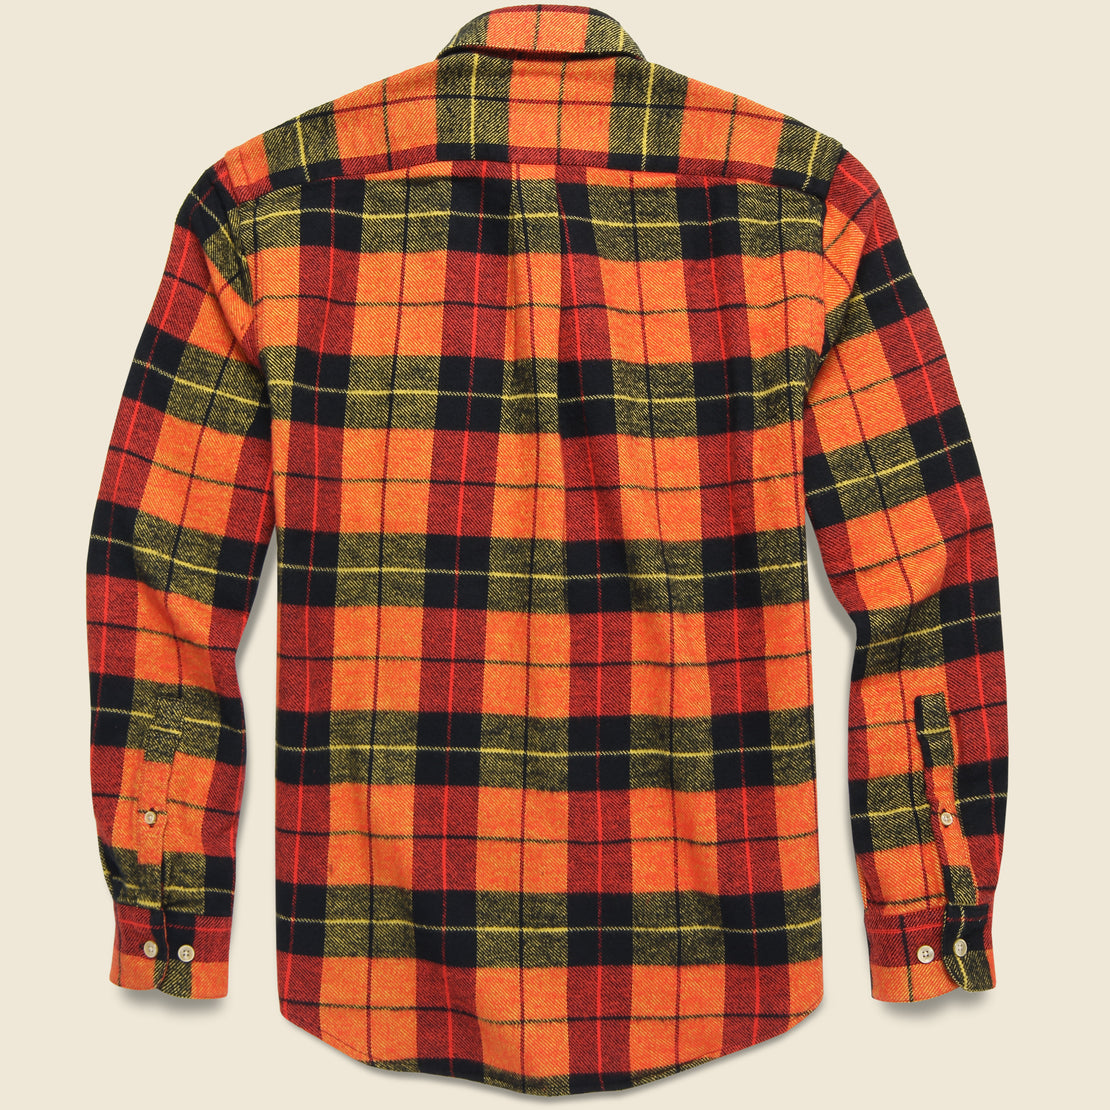 Nebraska Shirt - Grapefruit - Portuguese Flannel - STAG Provisions - Tops - L/S Woven - Plaid